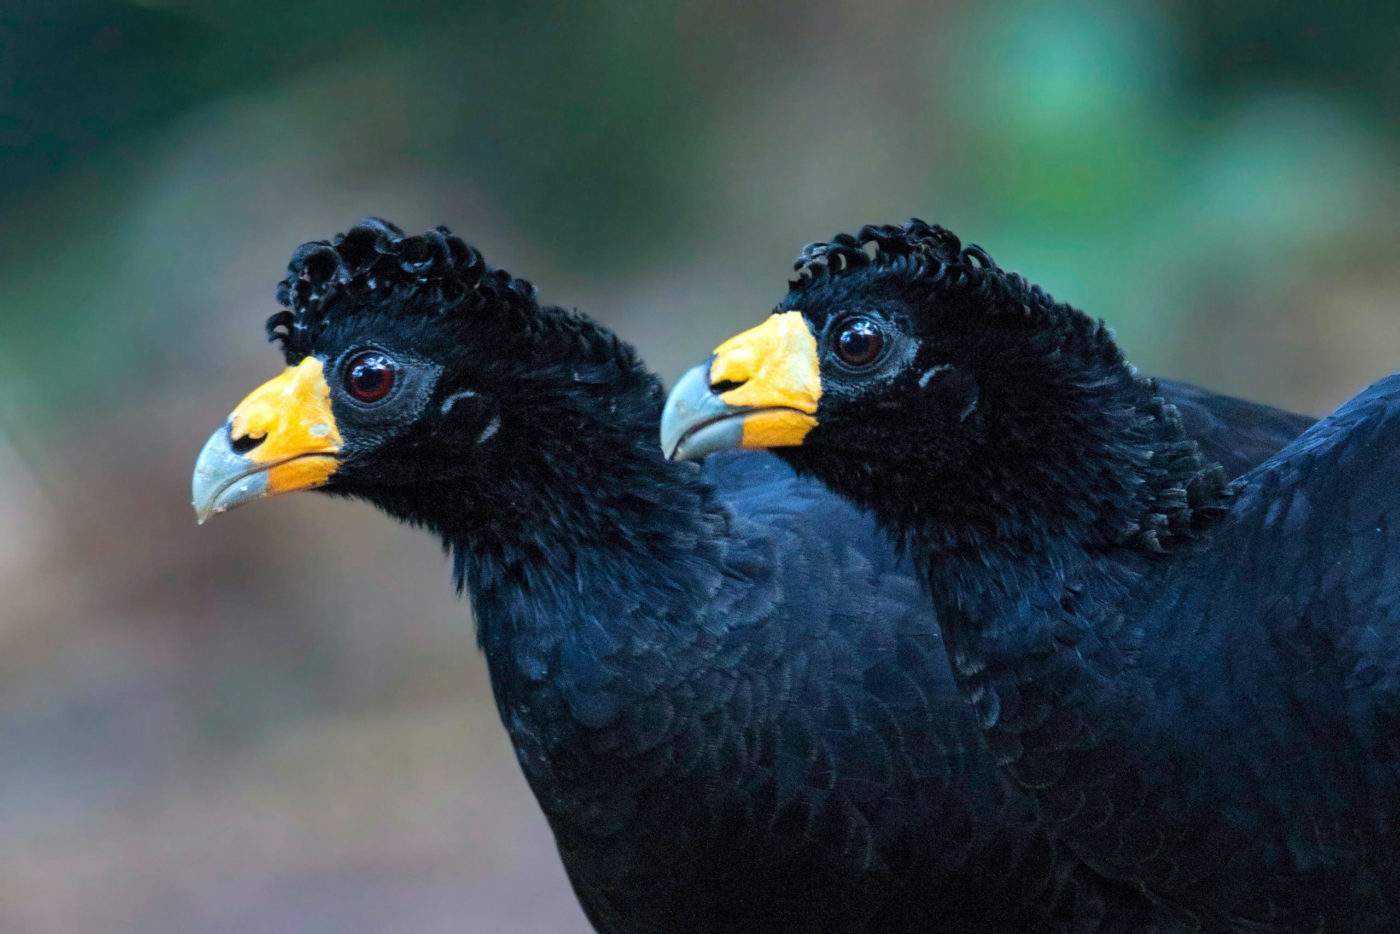 Two black birds with yellow beaks